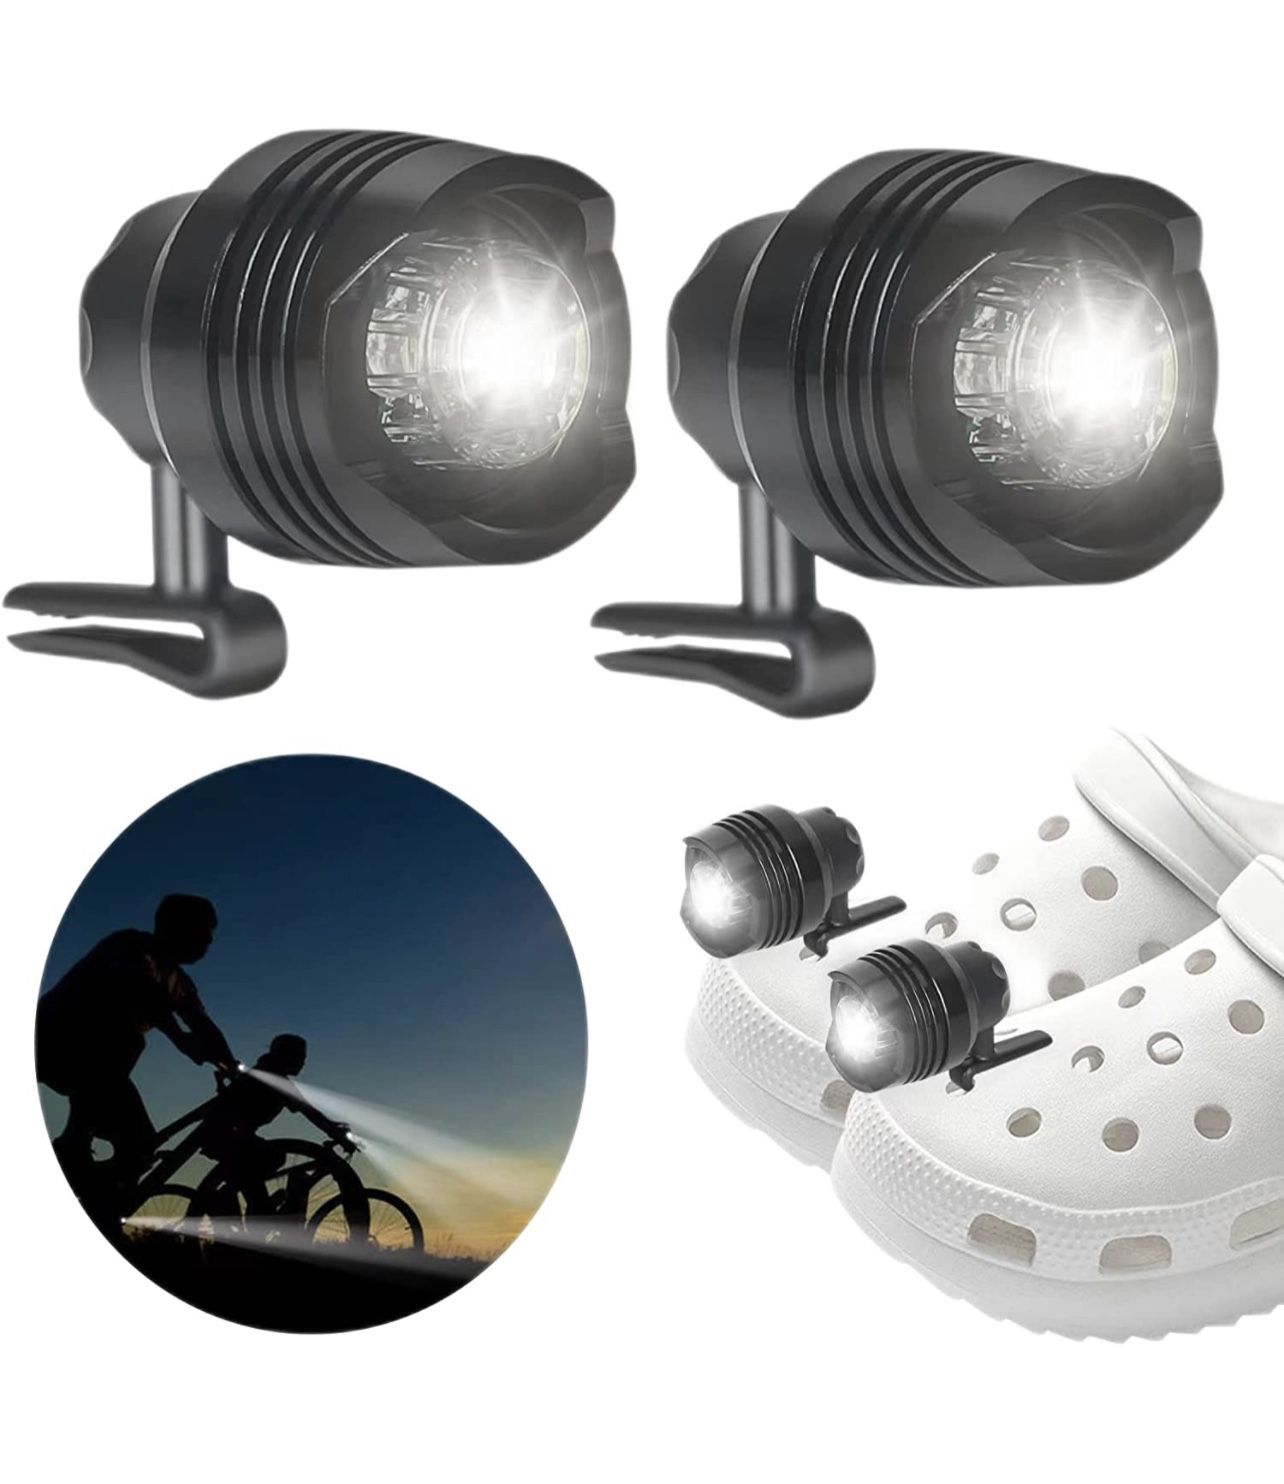 Headlights for Croc, 2023 Aluminum Alloy croc lights for shoes, Adjustable